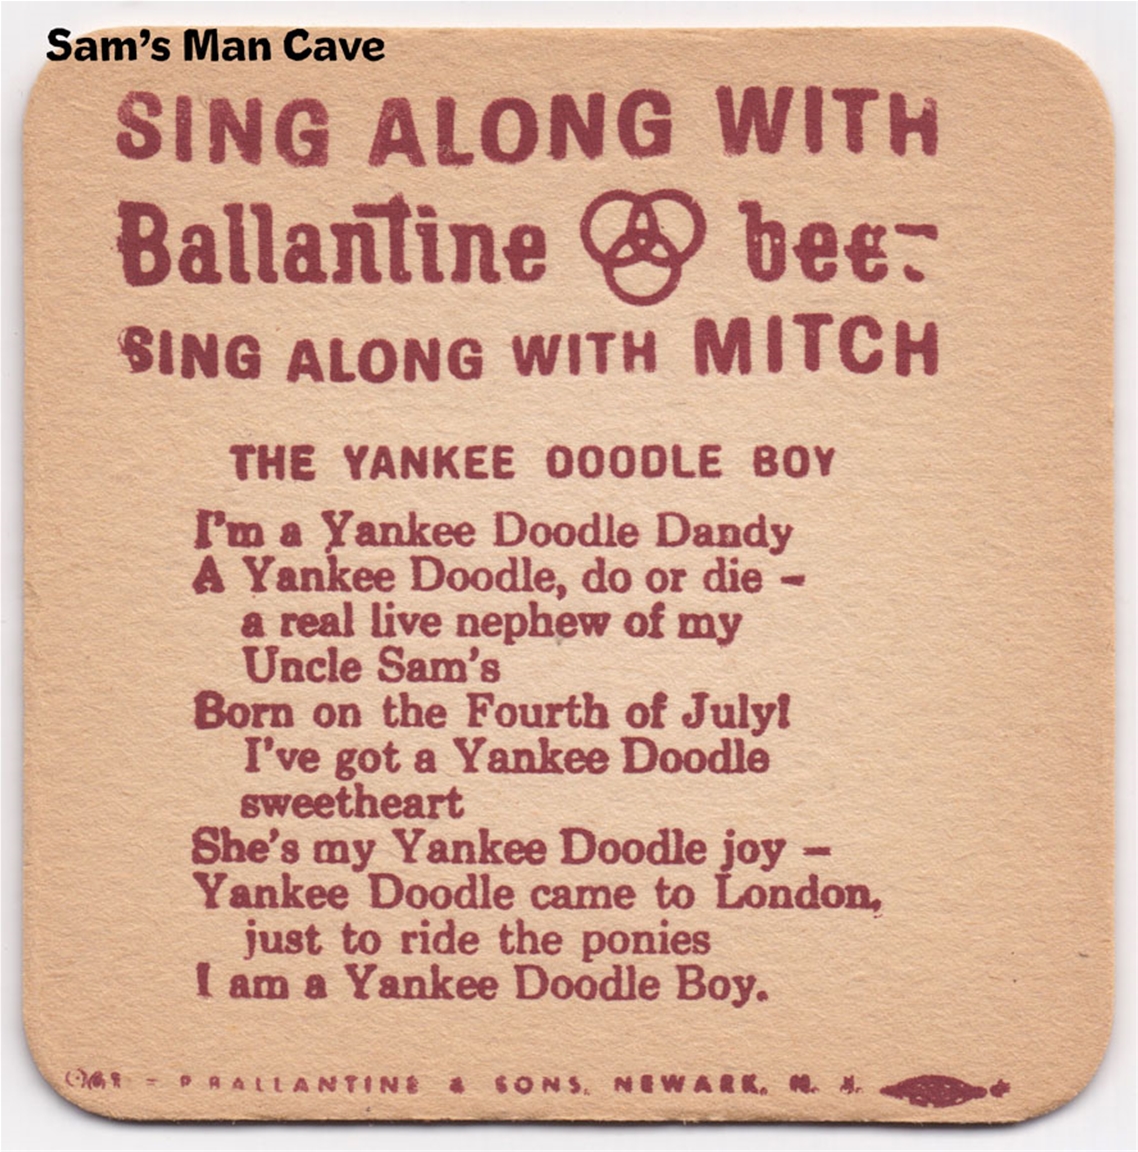 Ballantine Sing Along Yankee Doodle Boy Beer Coaster front of coaster